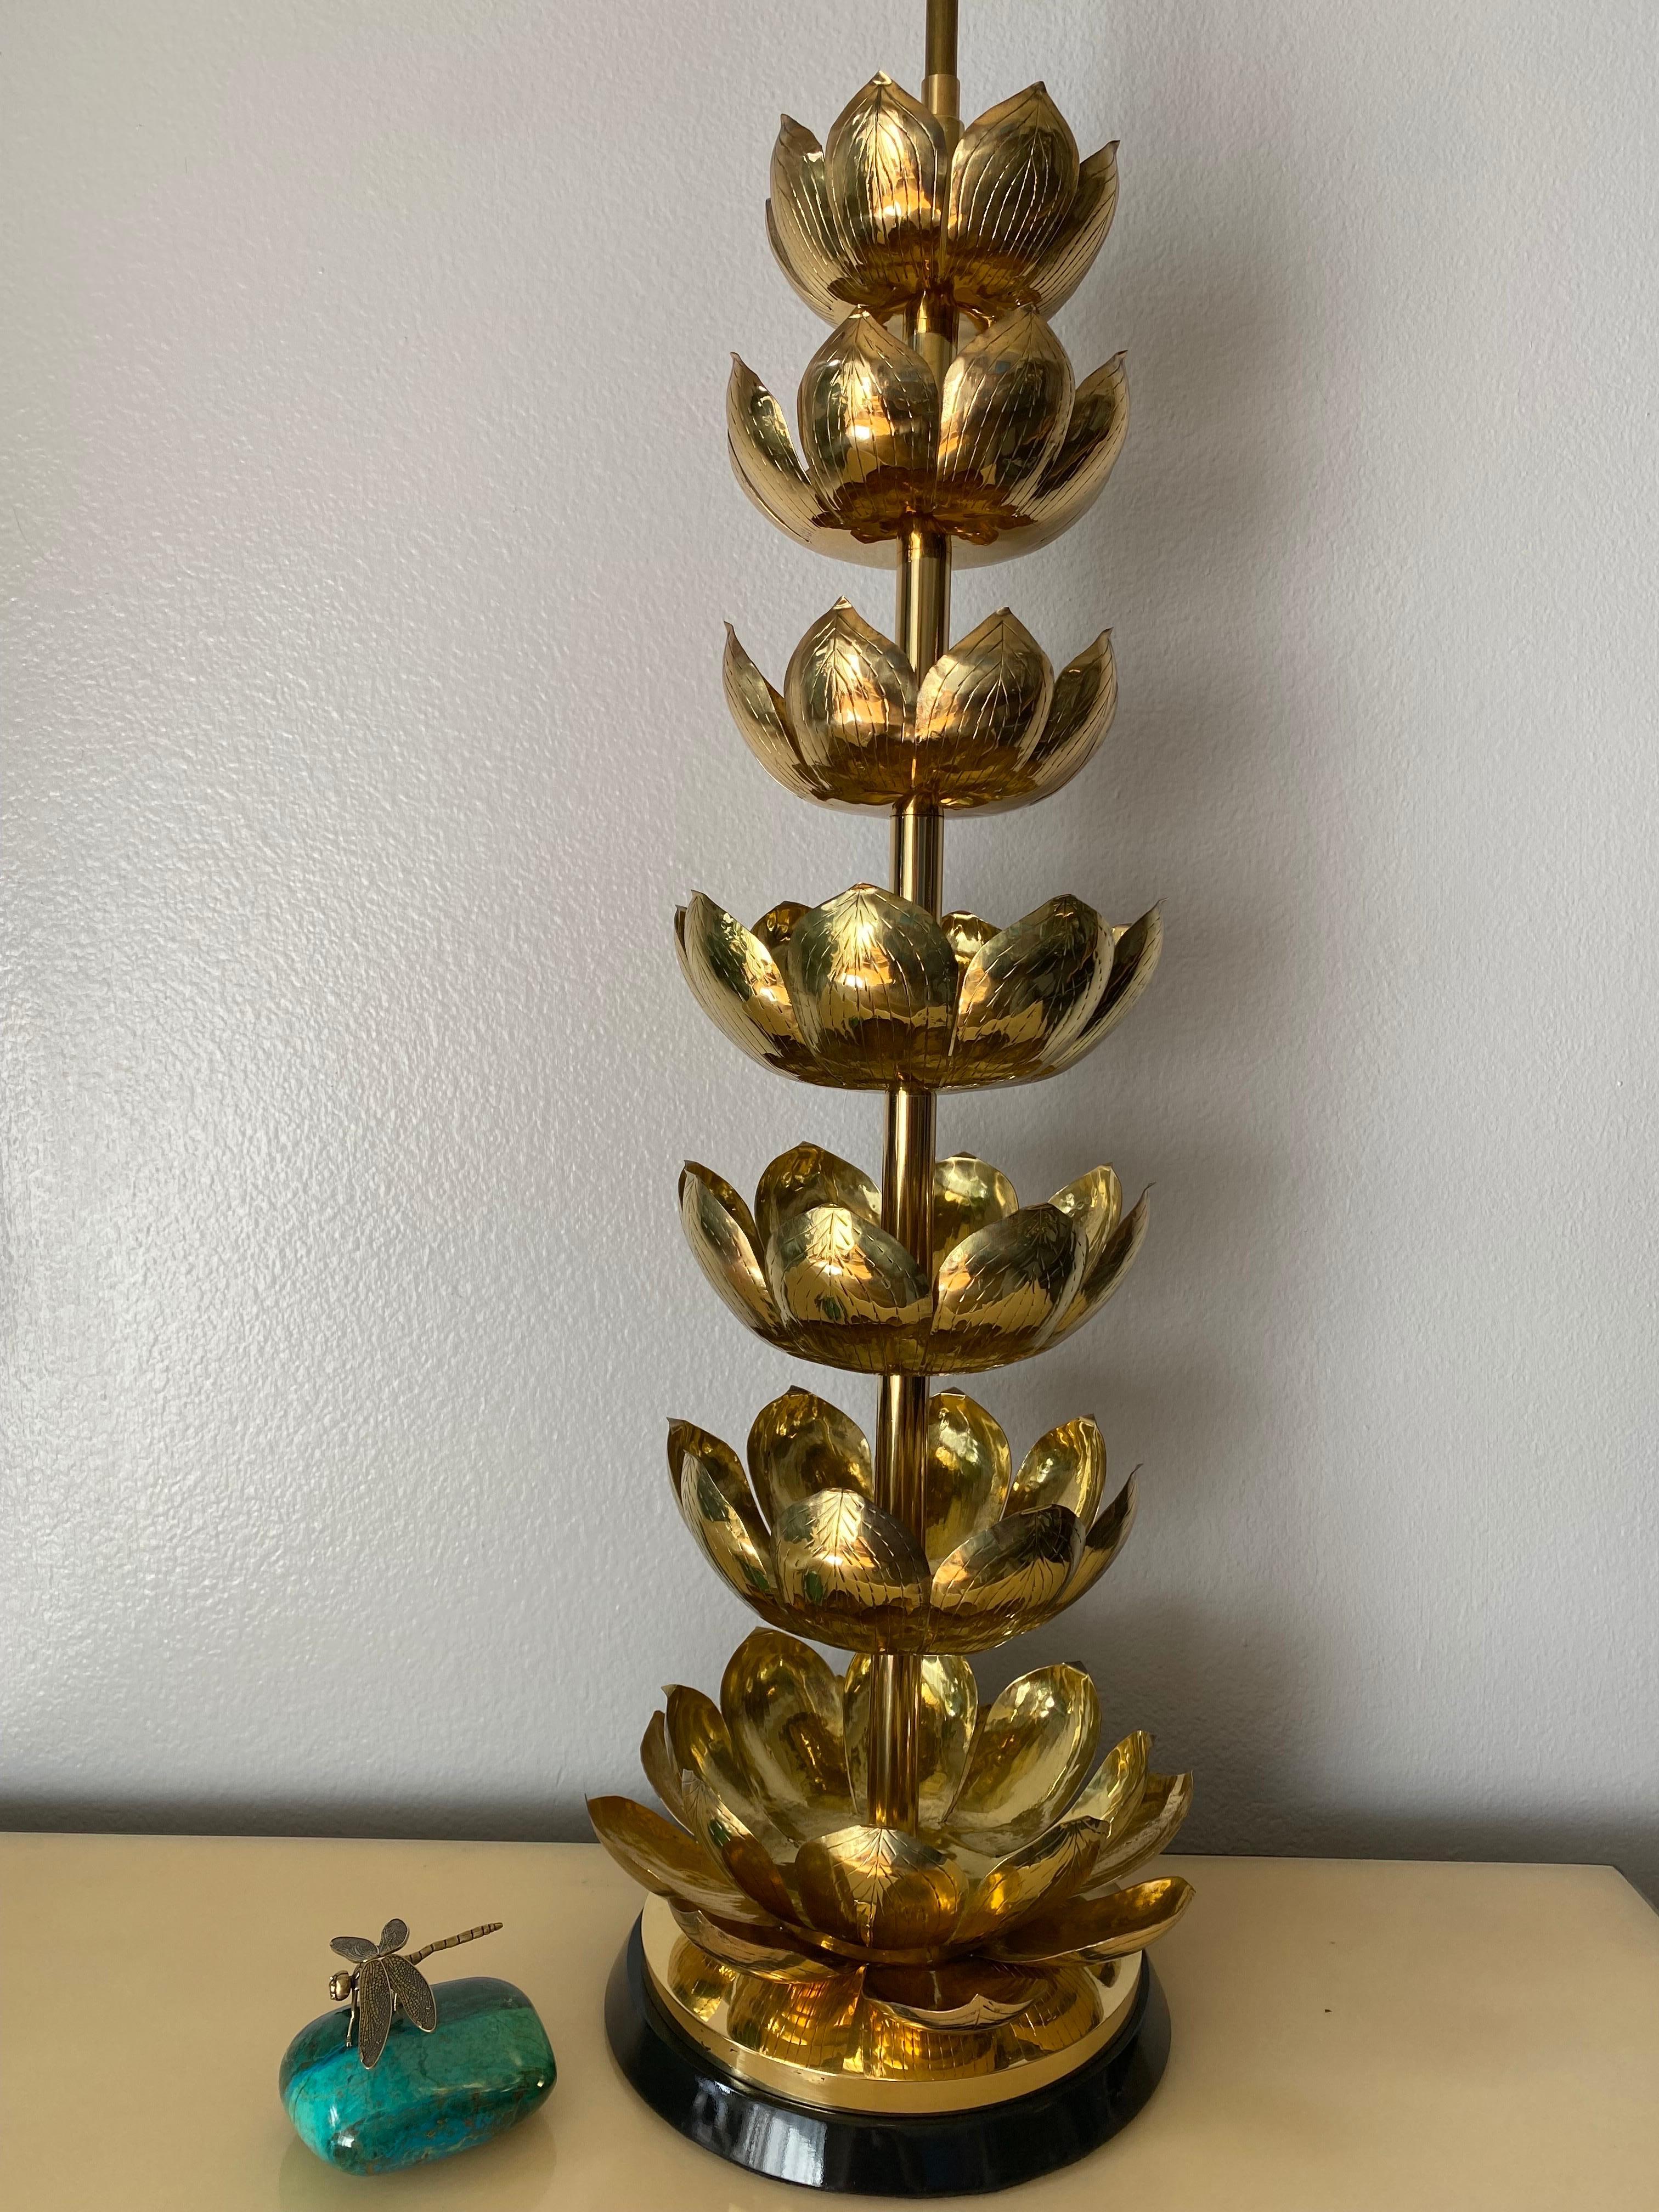 Polished brass lotus lamp by Feldman lighting. No lampshade.